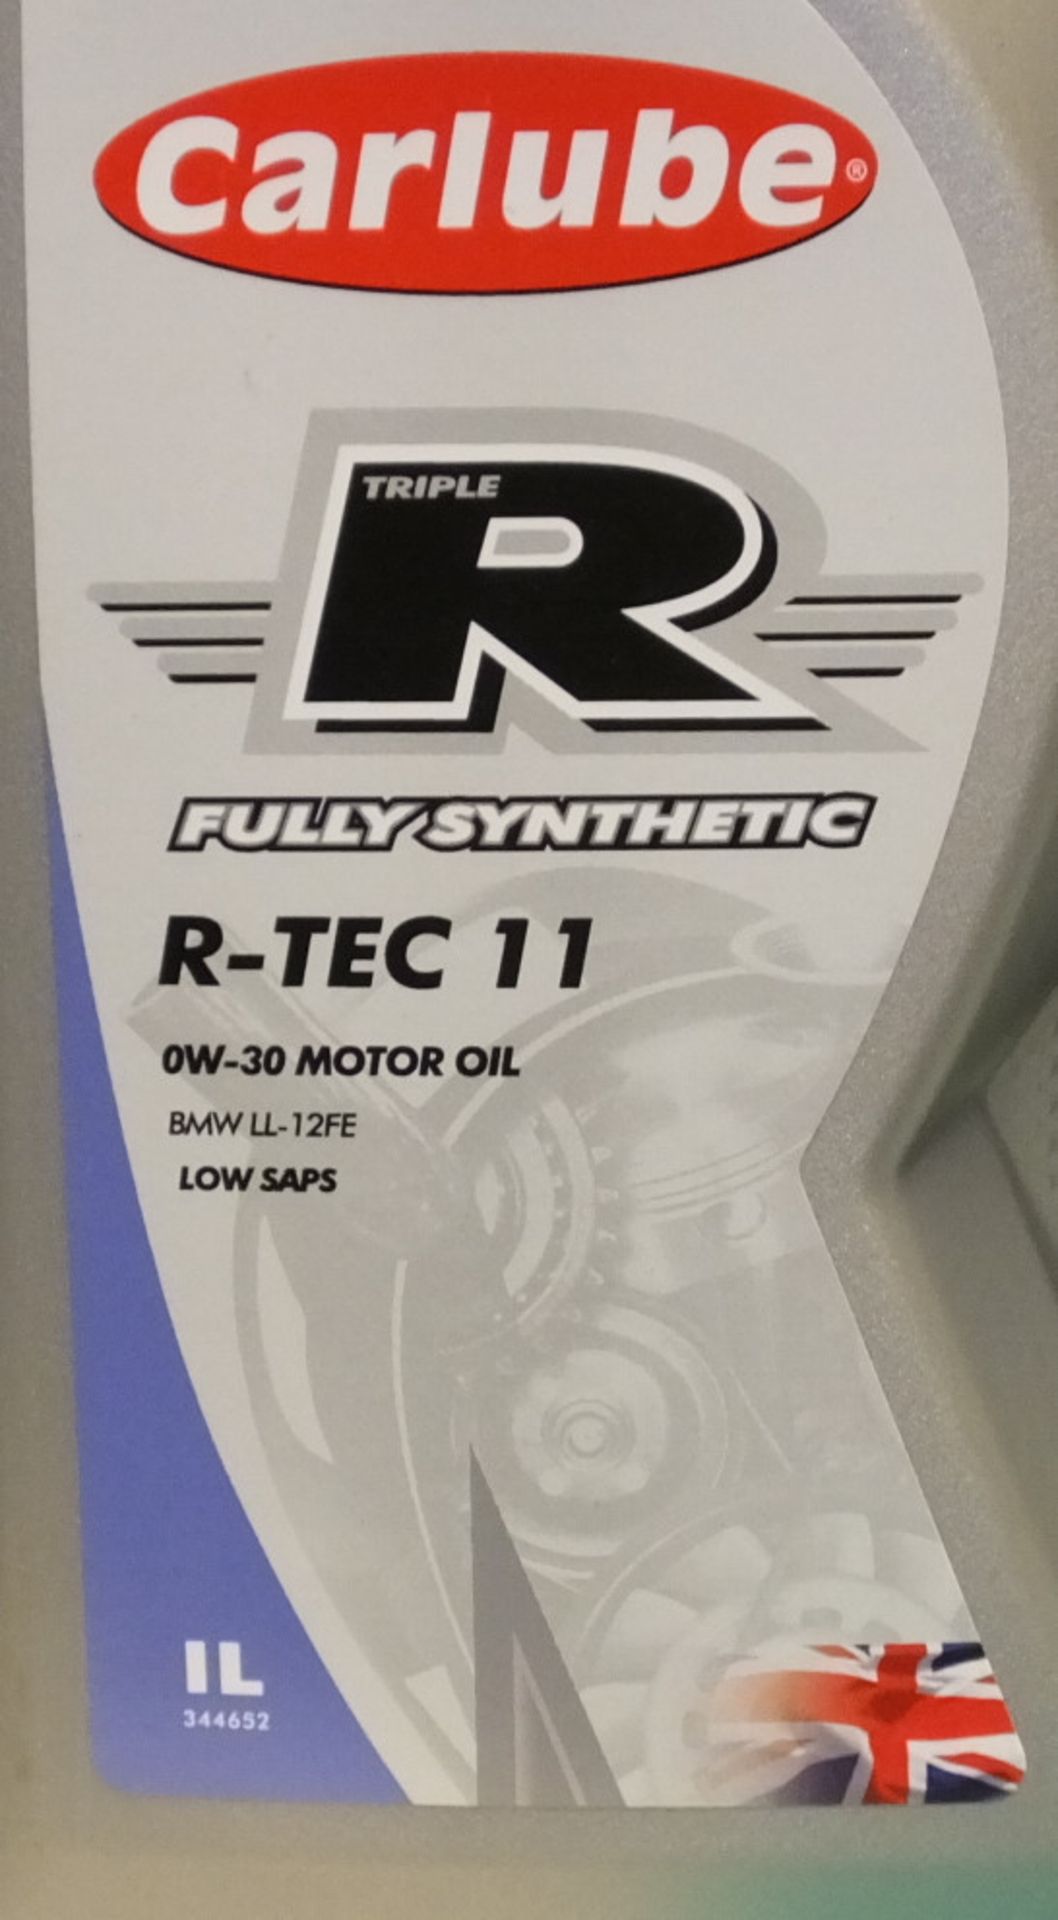 10x Carlube Triple R Fully Synthetic R-Tec 11 - 0W-30 Motor Oil - 1L - Image 2 of 2